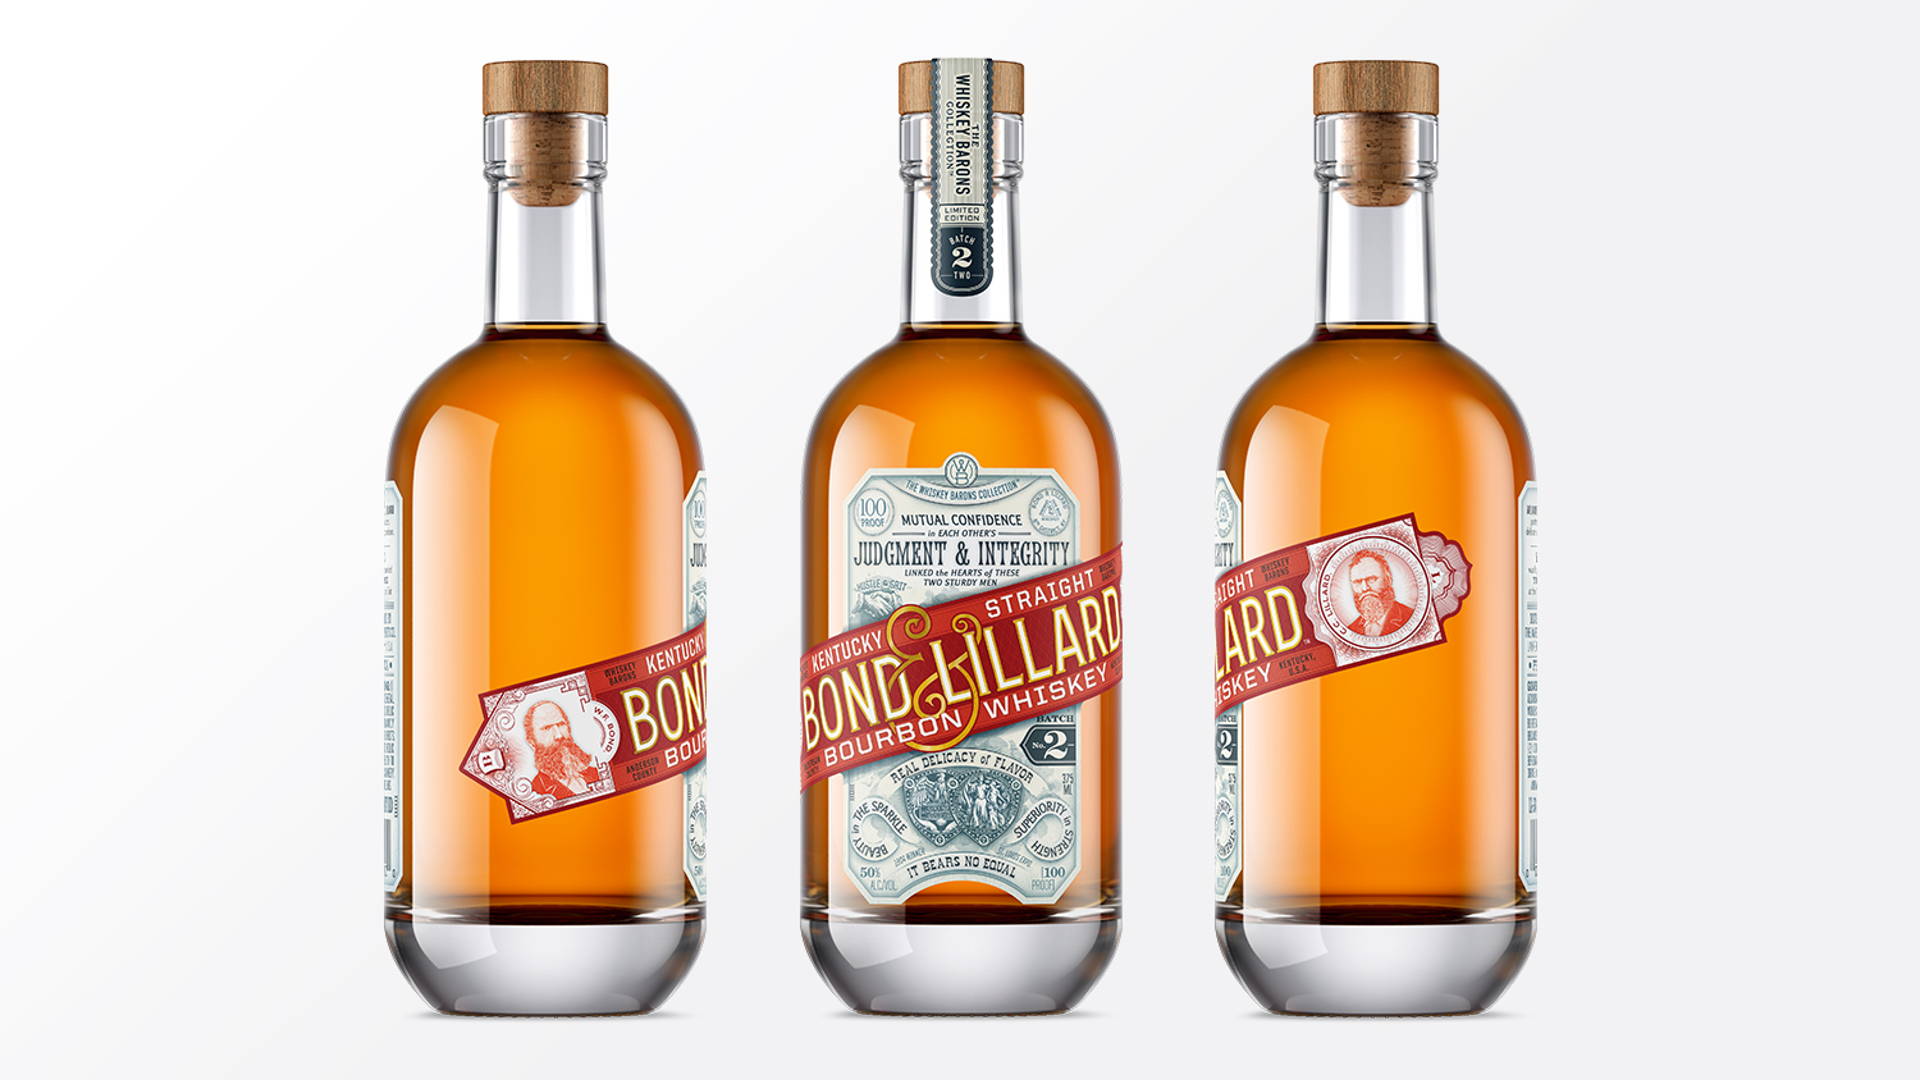 Featured image for Bond & Lillard Bourbon – “It Bears no Equal.”